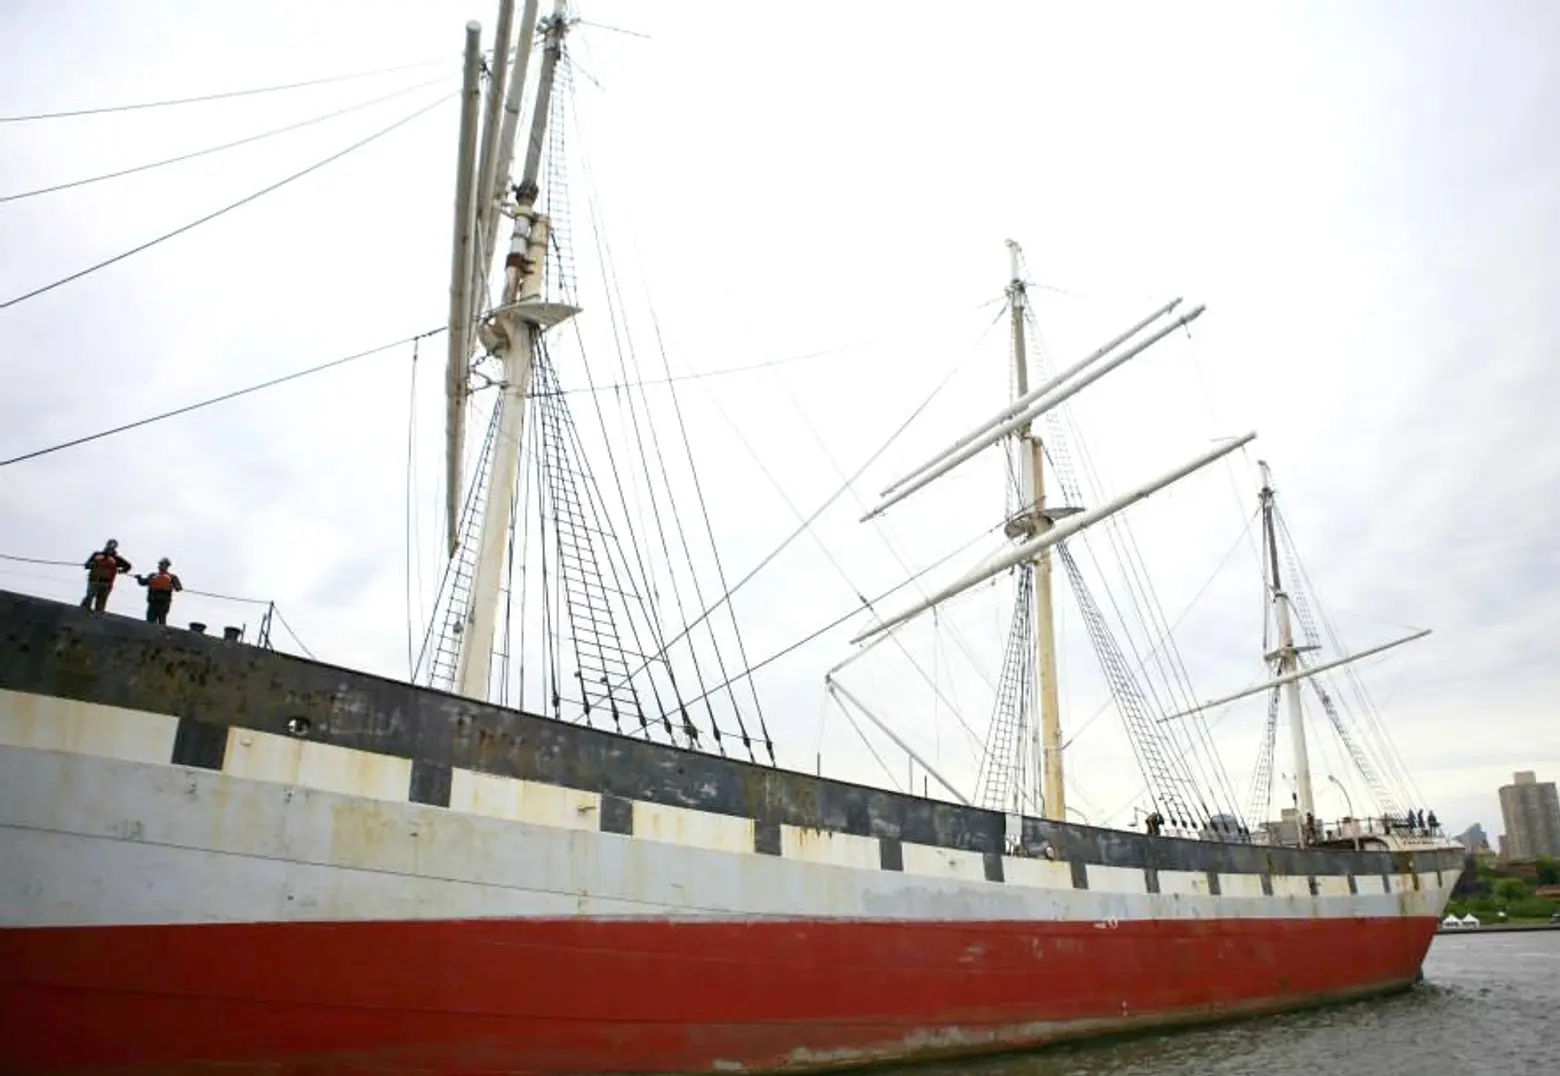 South Street Seaport Museum, Wavertree, historic ships, South Street Seaport Historic District